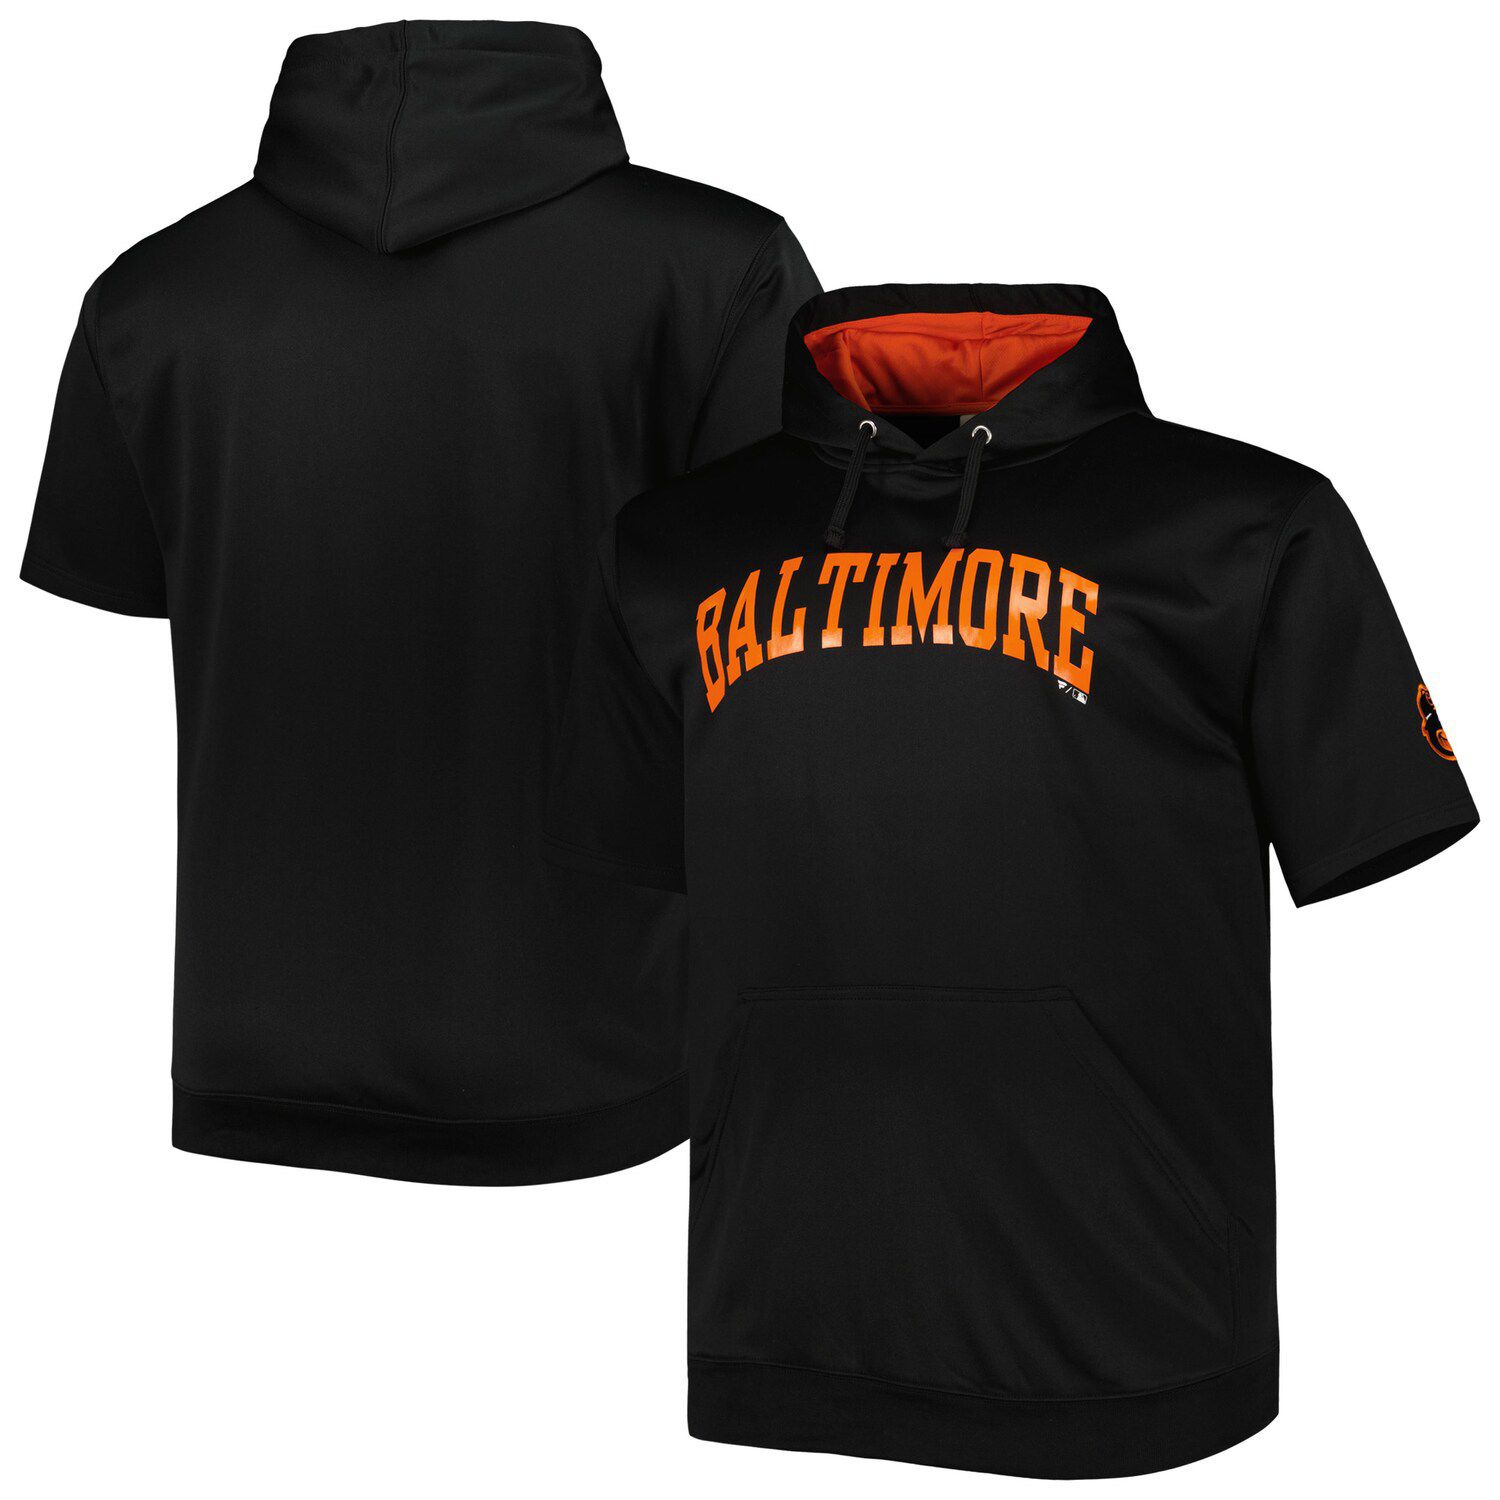 New Baltimore Orioles Womens Plus Sizes 1X-4X Black Majestic Shirt